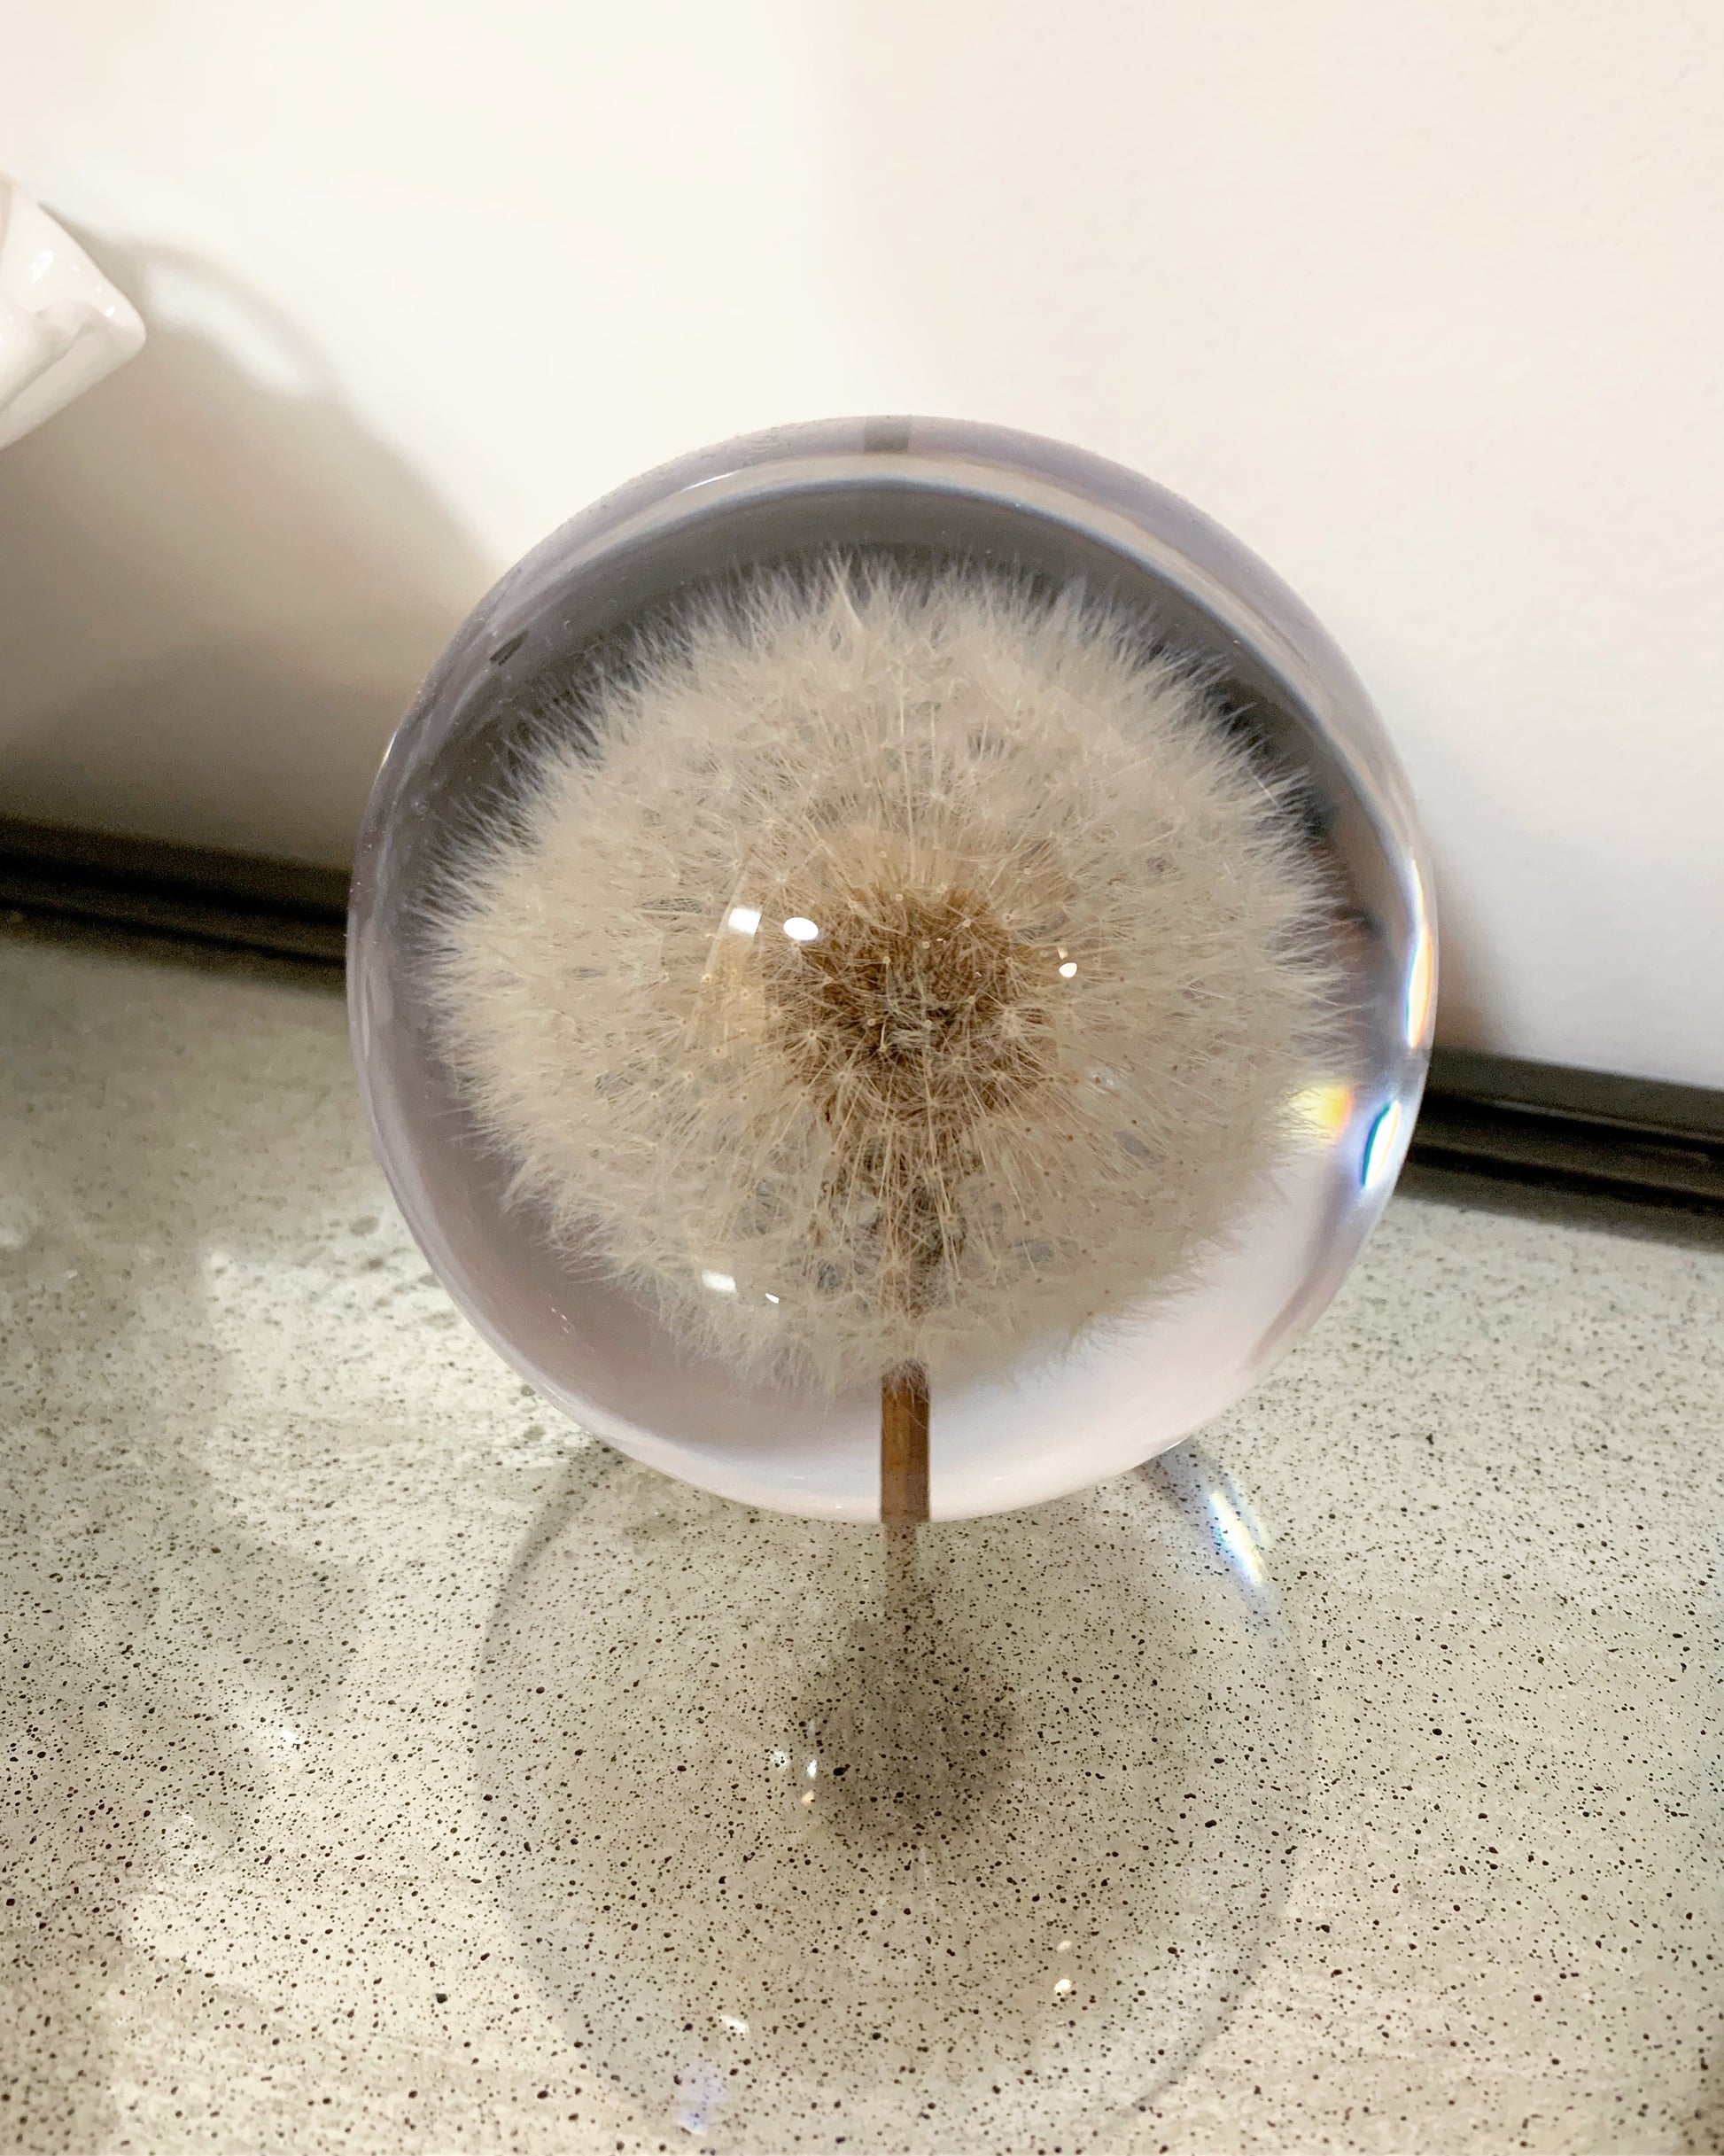 Crystal ball encapsulating a full preserved dandelion